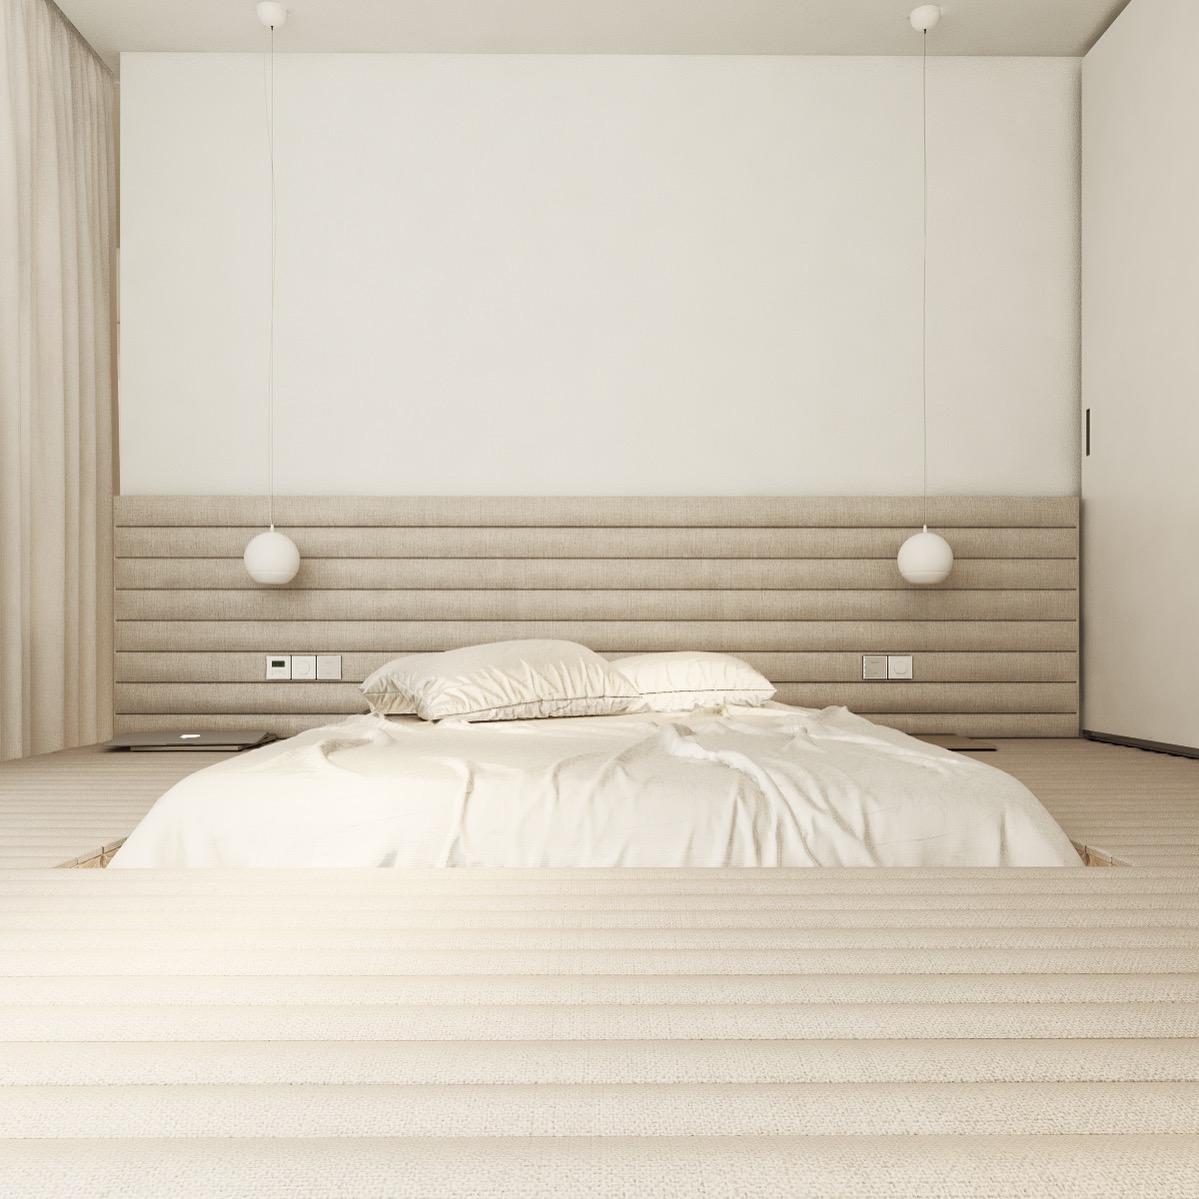 design interior design  Minimalism beige